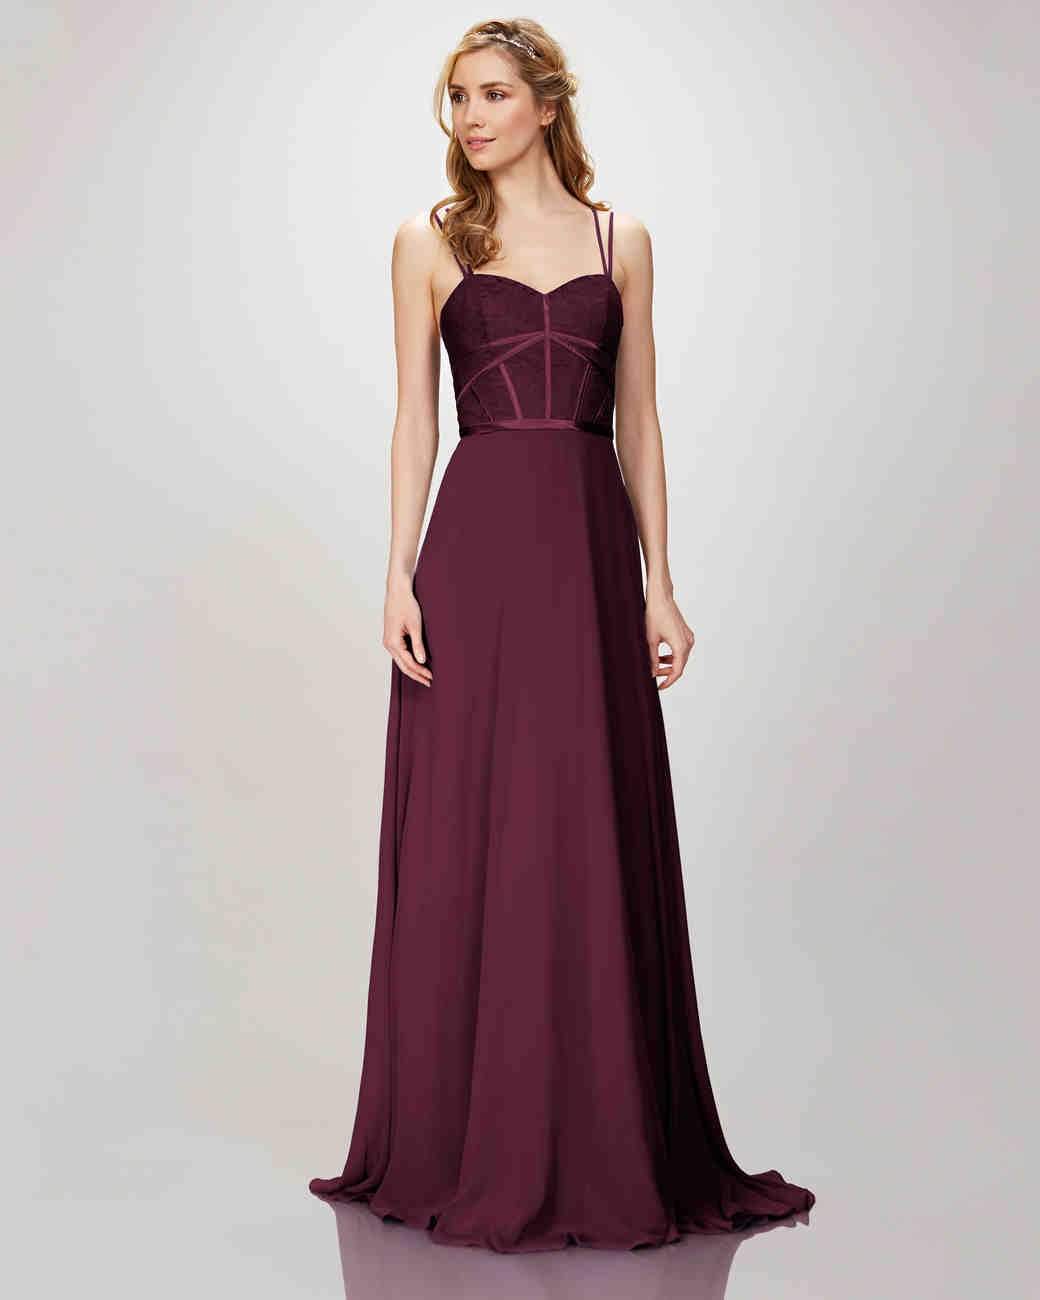 Burgundy Bridesmaid Dresses | Martha Stewart Weddings